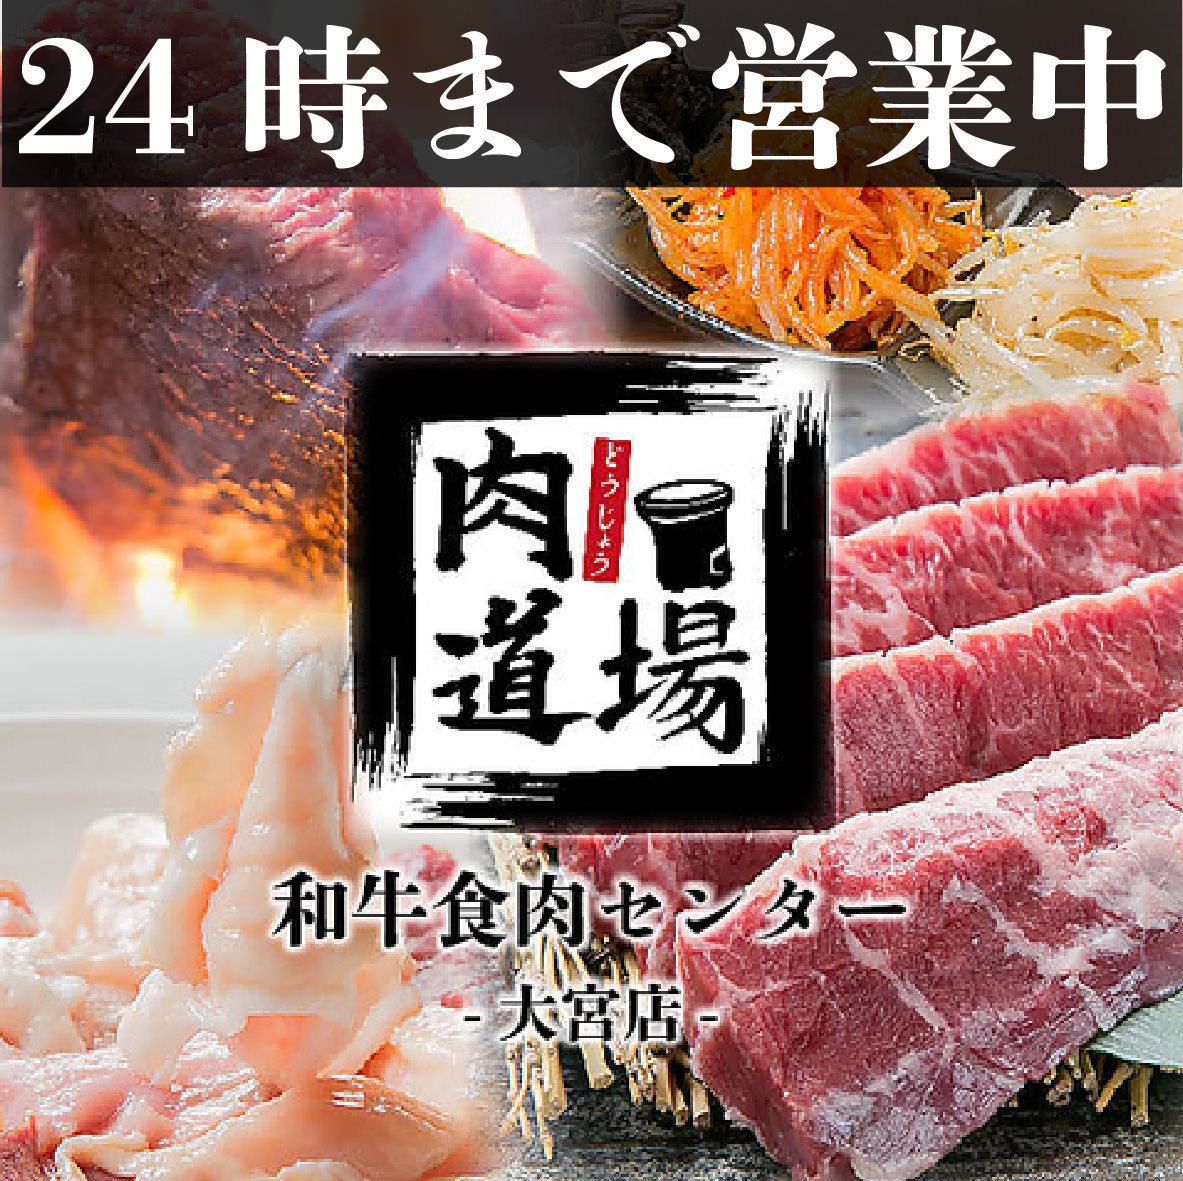 Just inside Omiya Minami Ginza-dori☆All-you-can-eat Kuroge Wagyu Beef! This is a popular restaurant!